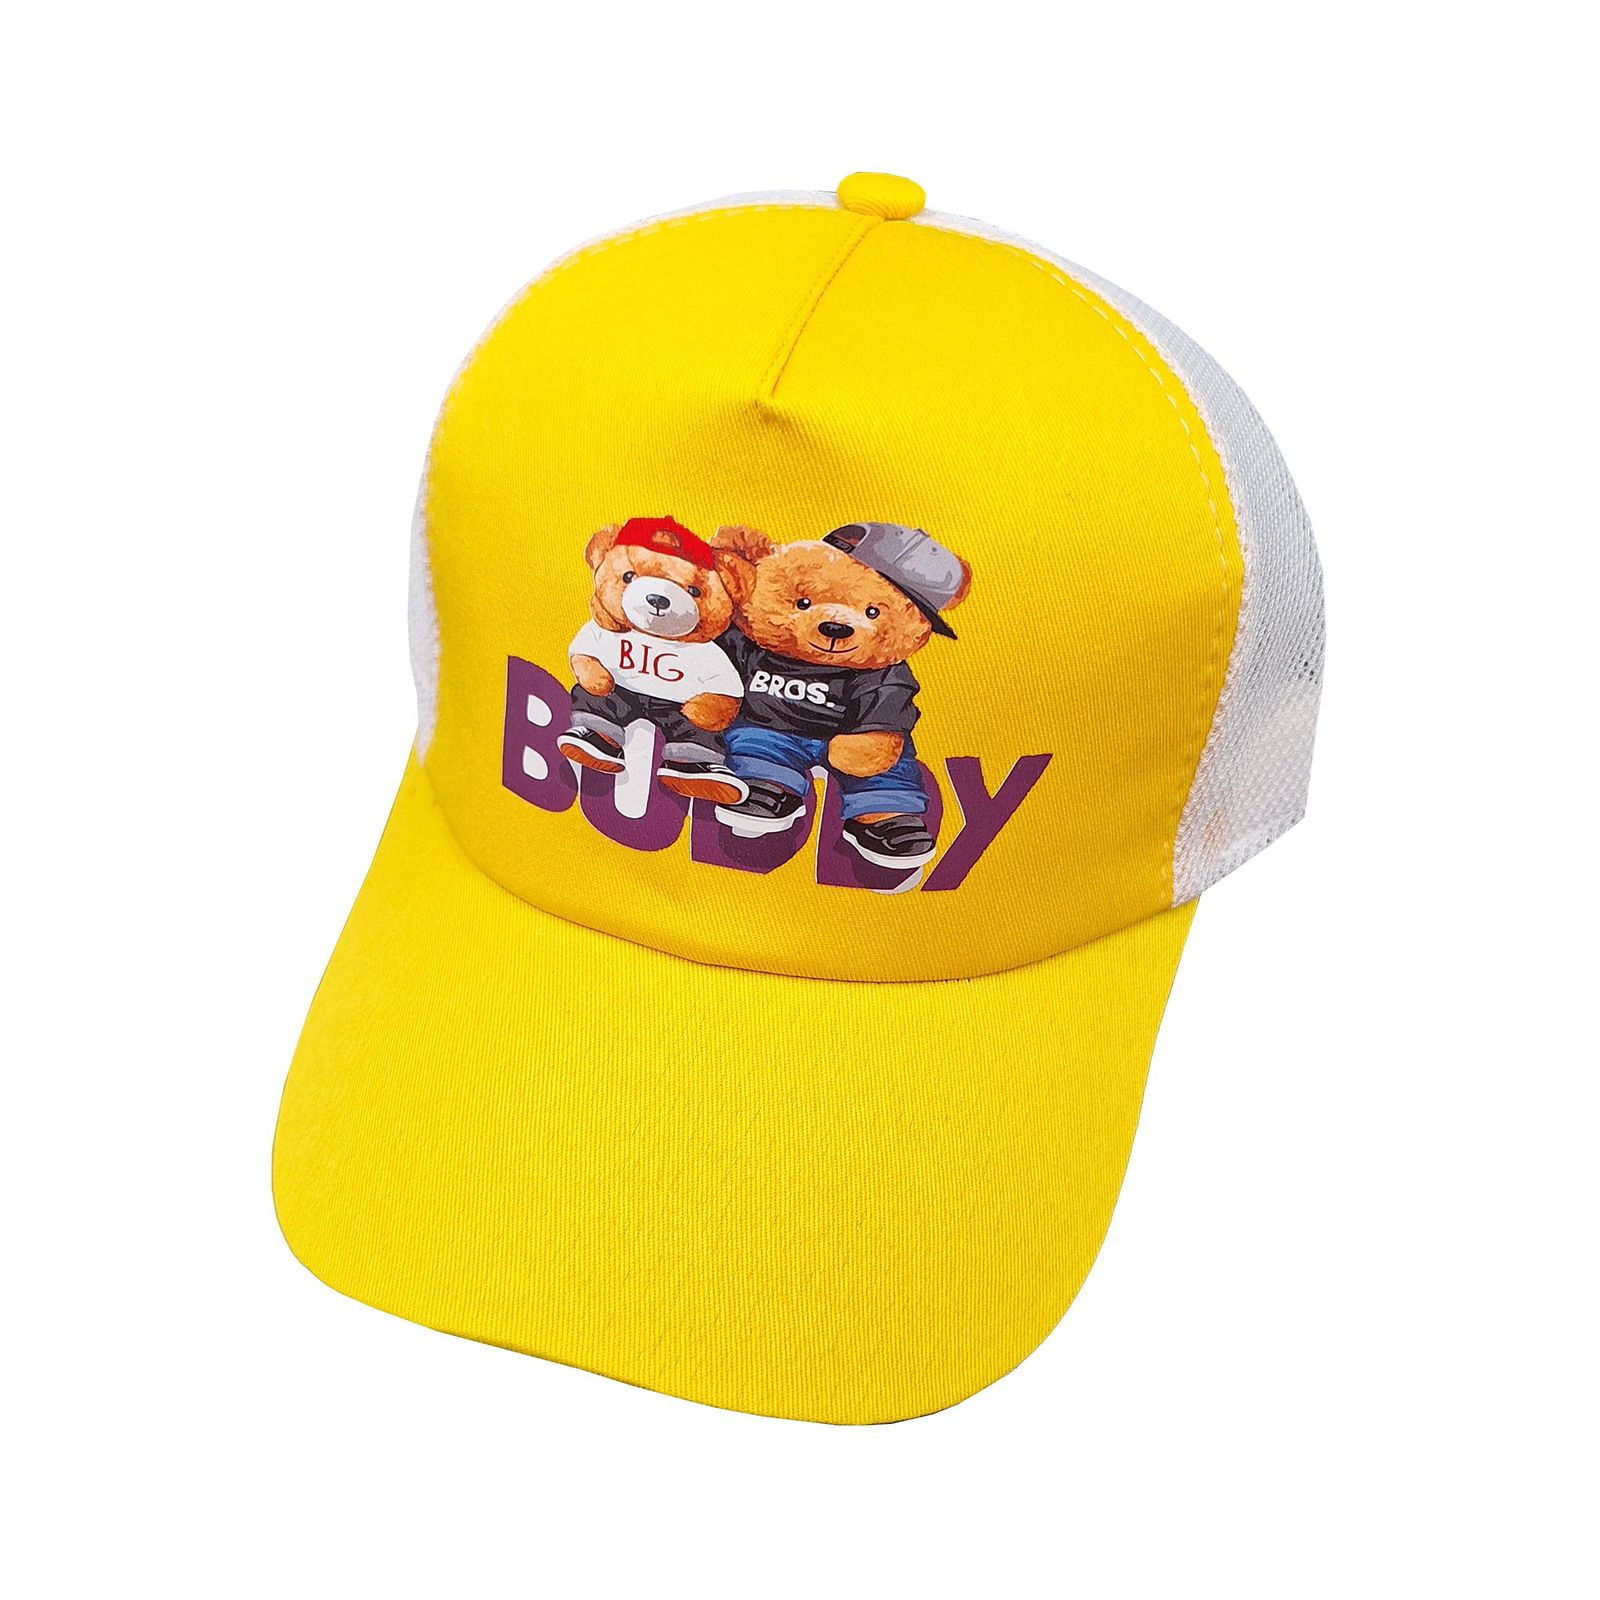 کلاه کپ بچگانه مدل BDDY کد 1190 رنگ زرد -  - 1